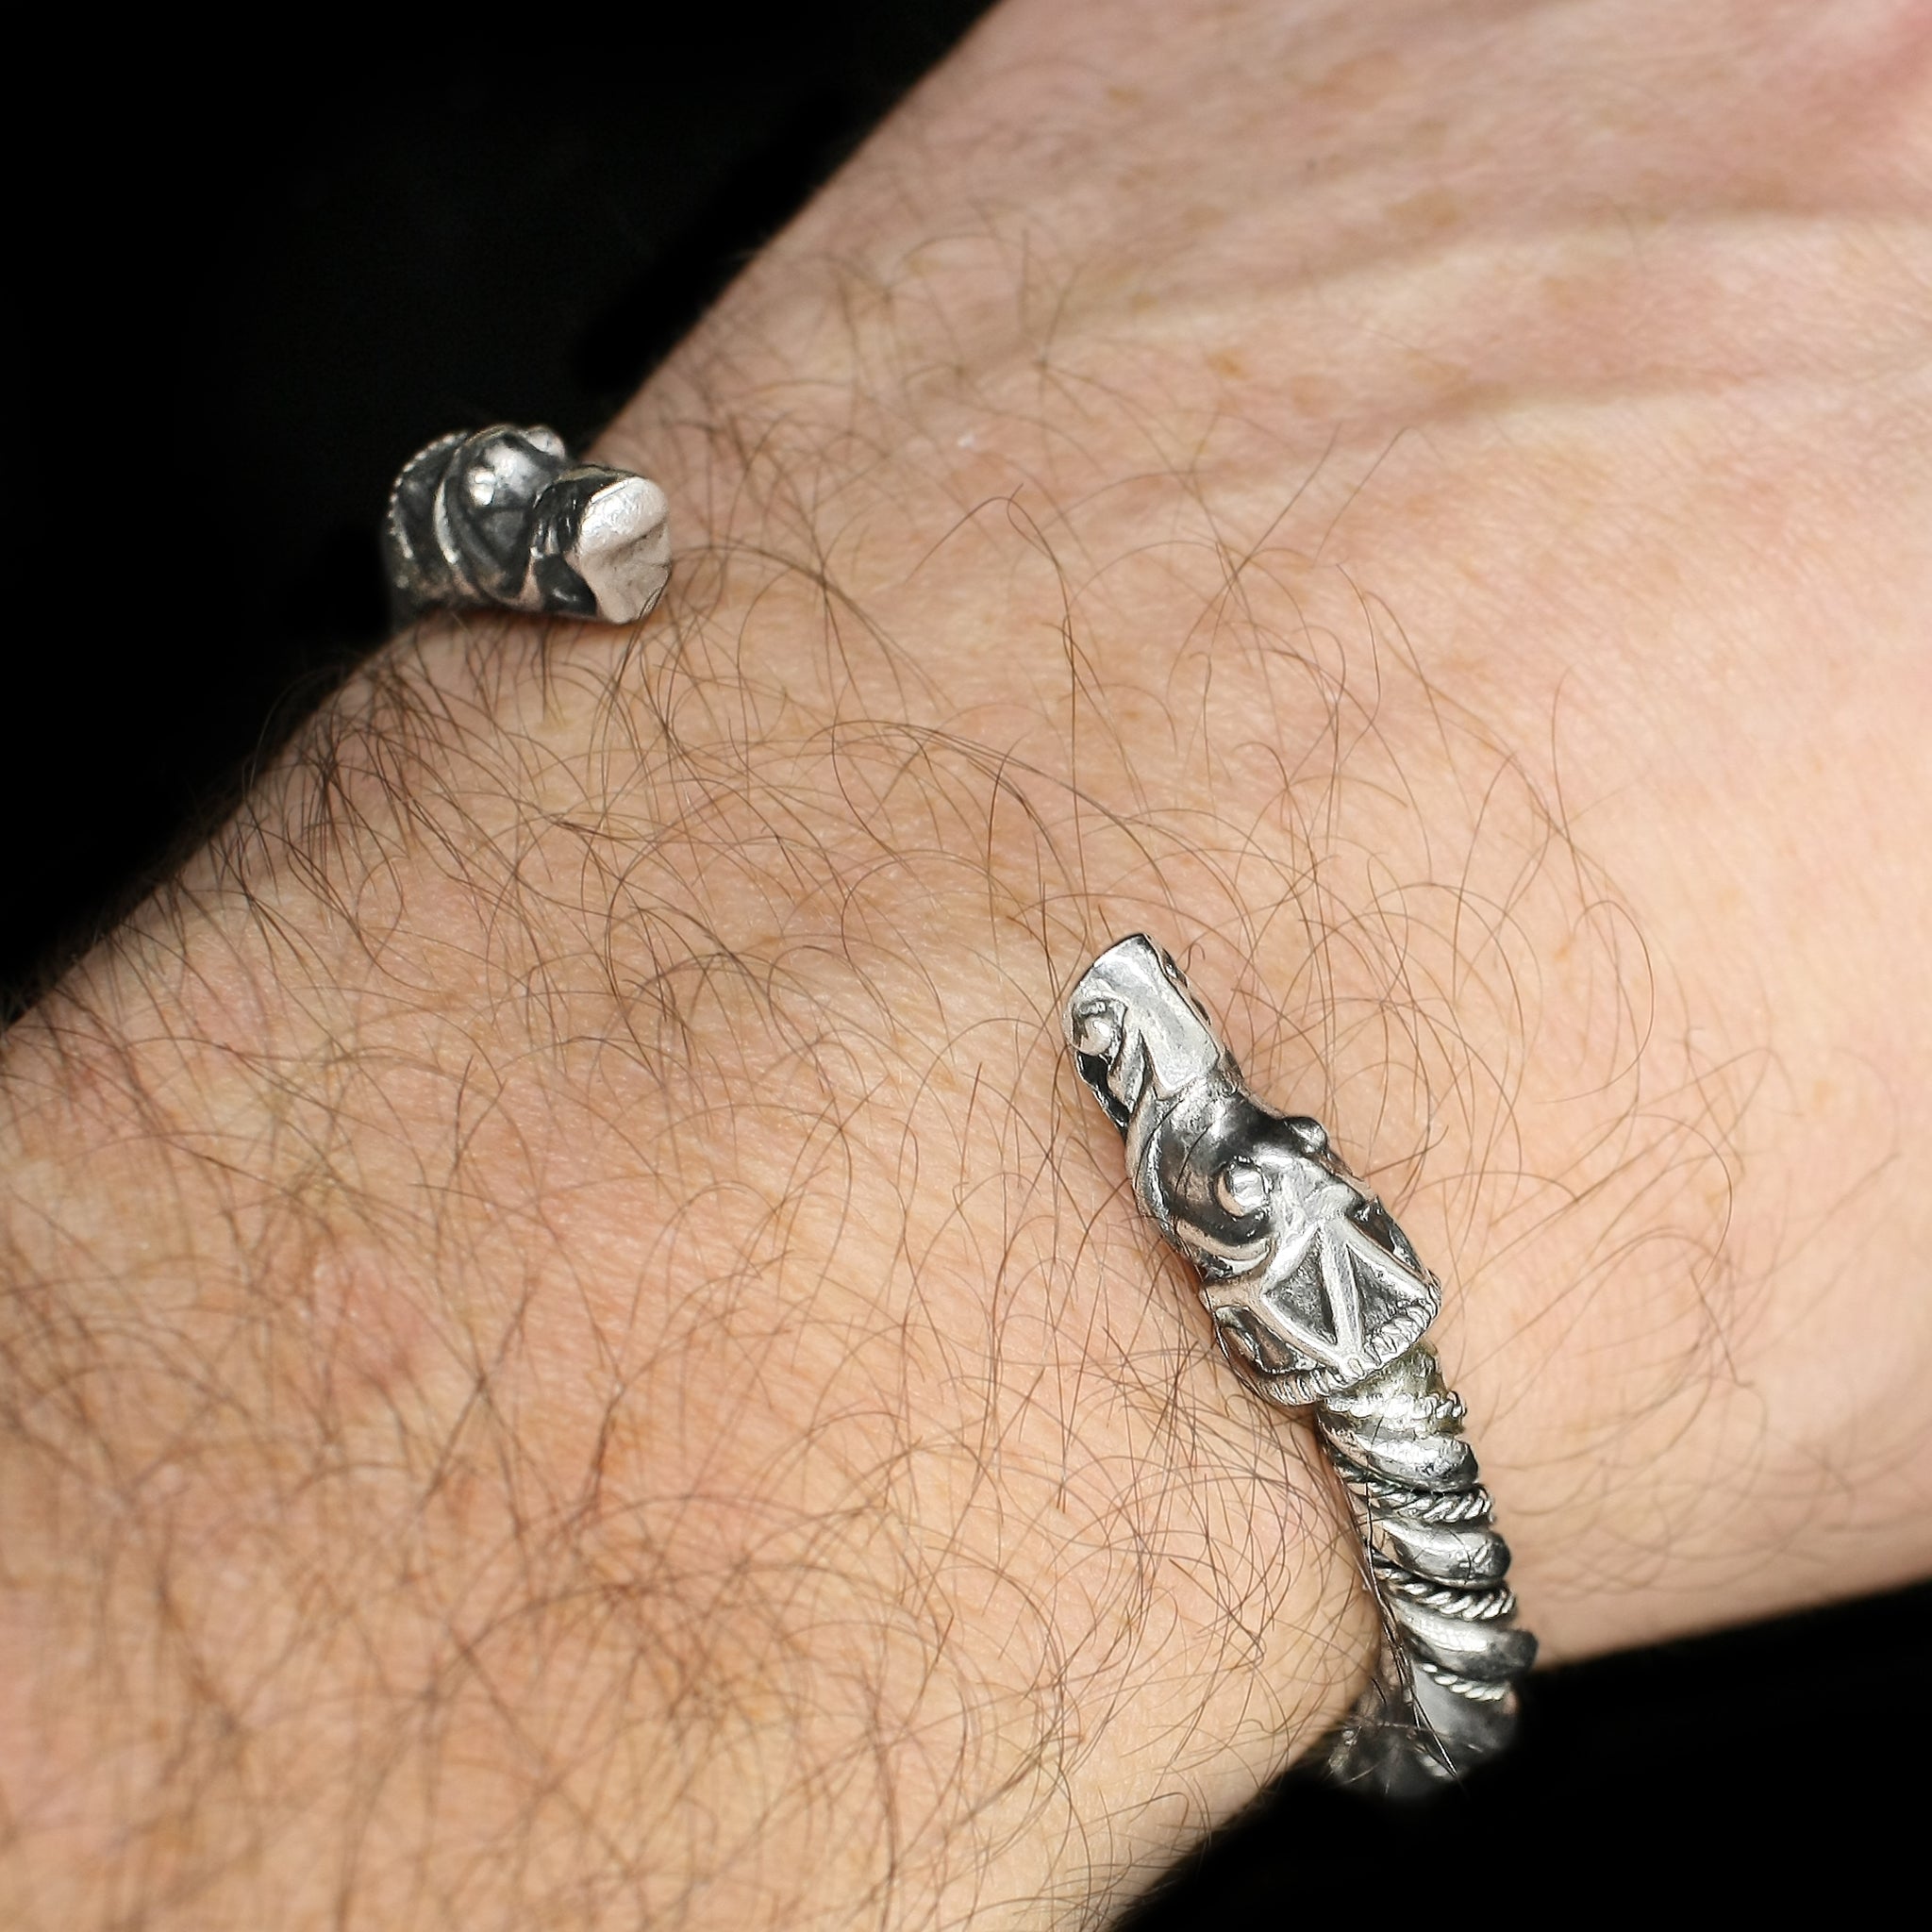 Medium Twisted Silver Arm Ring With Gotlandic Dragon Heads on Wrist